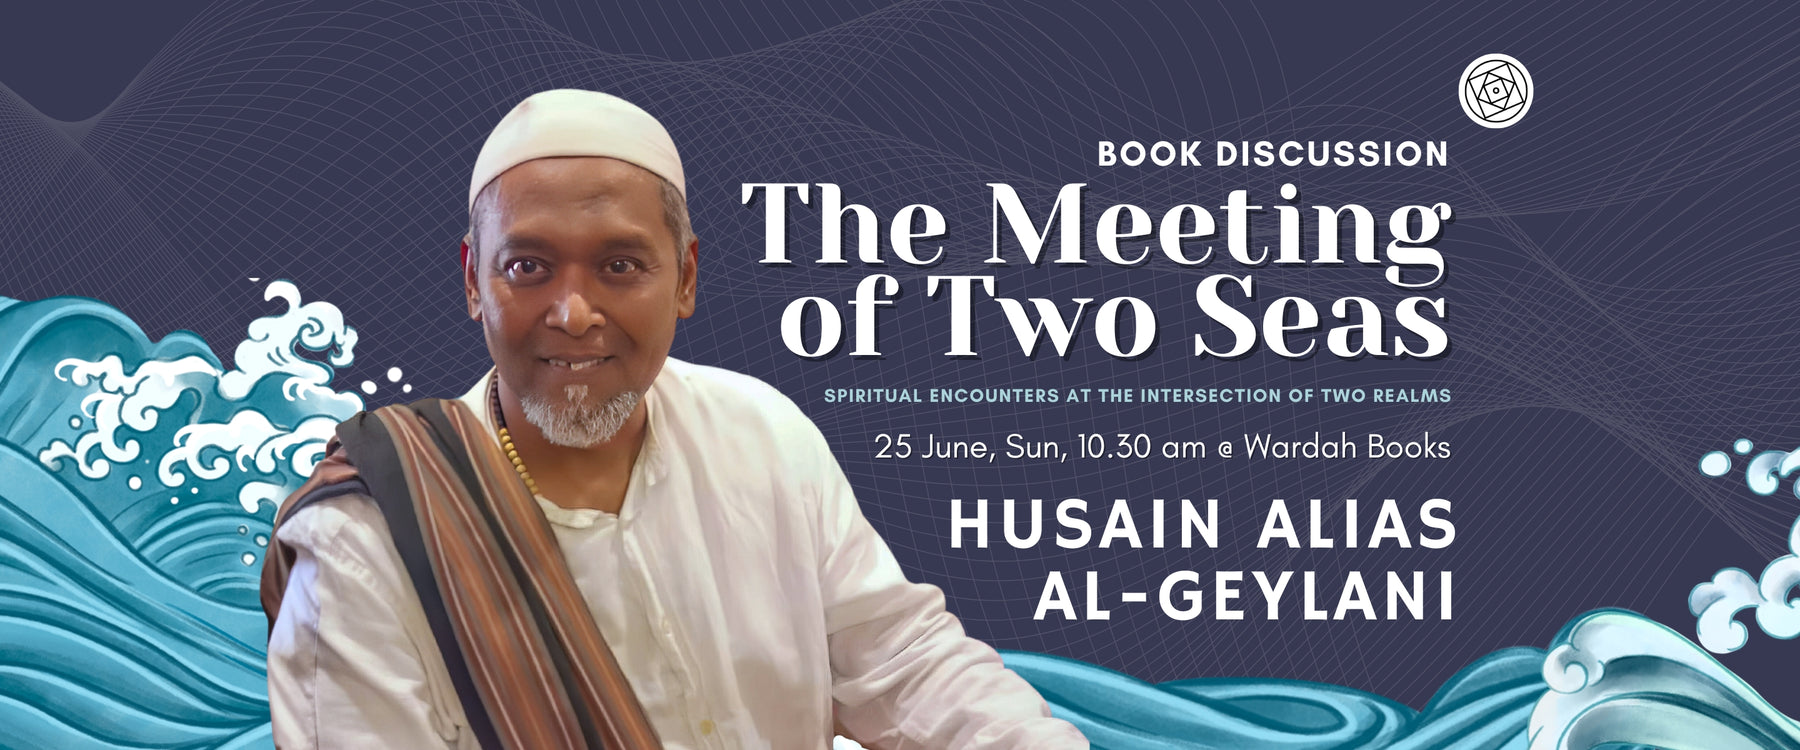 Book Discussion with Husain Alias